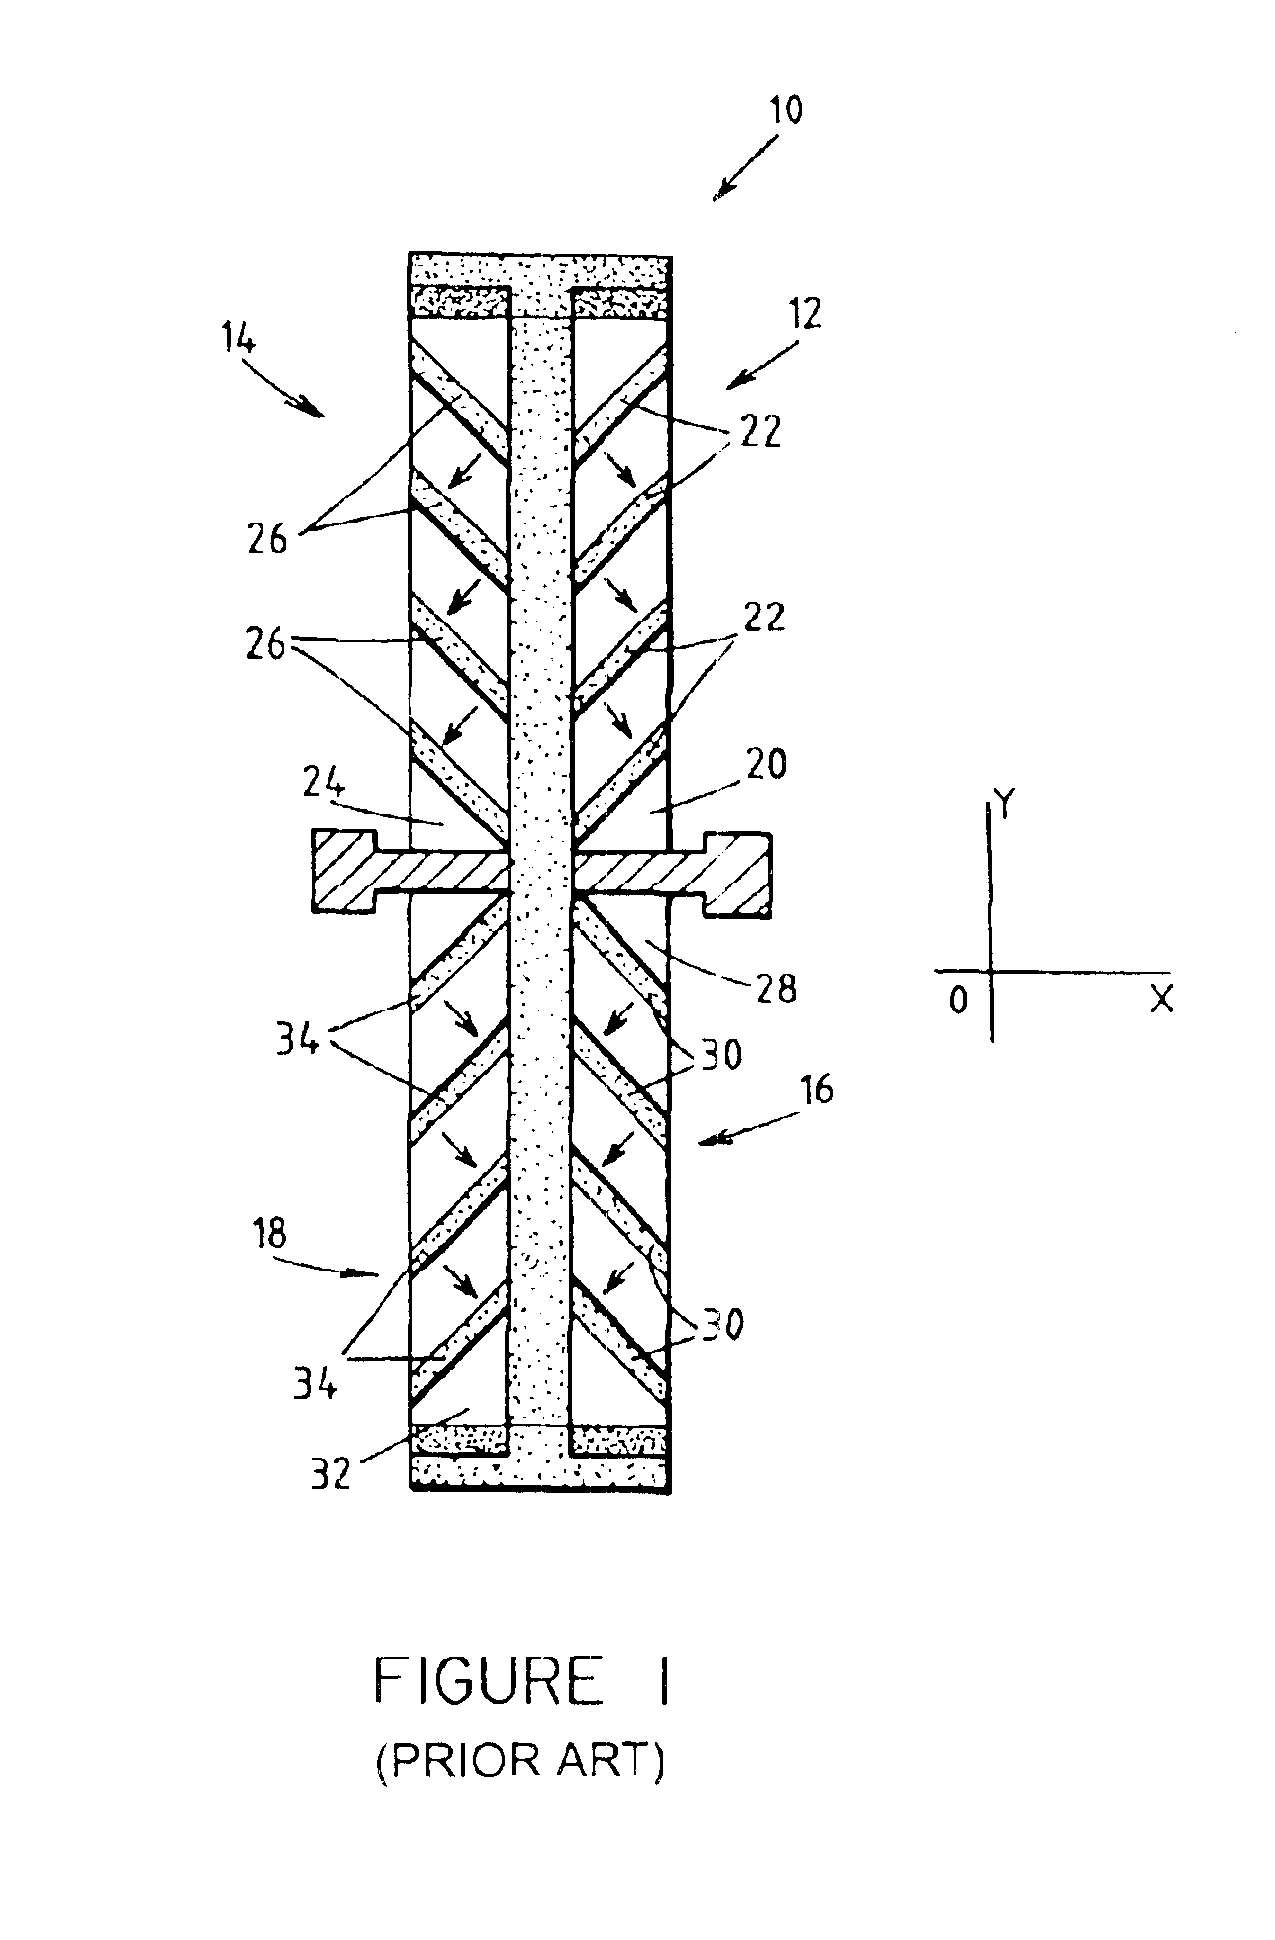 Barber pole structure for magnetoresistive sensors and method of forming same